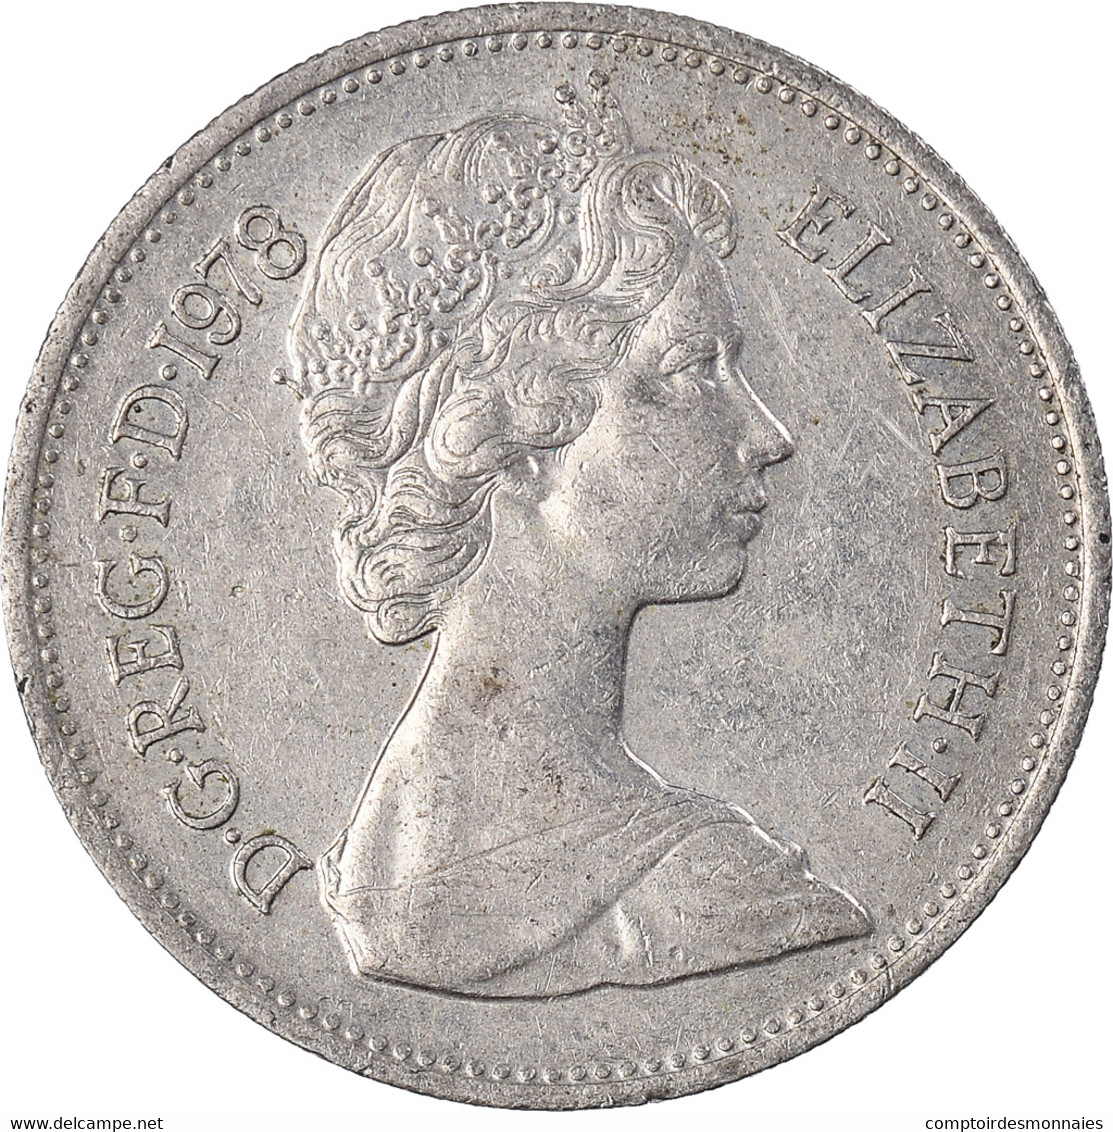 Monnaie, Grande-Bretagne, 5 New Pence, 1978 - 5 Pence & 5 New Pence